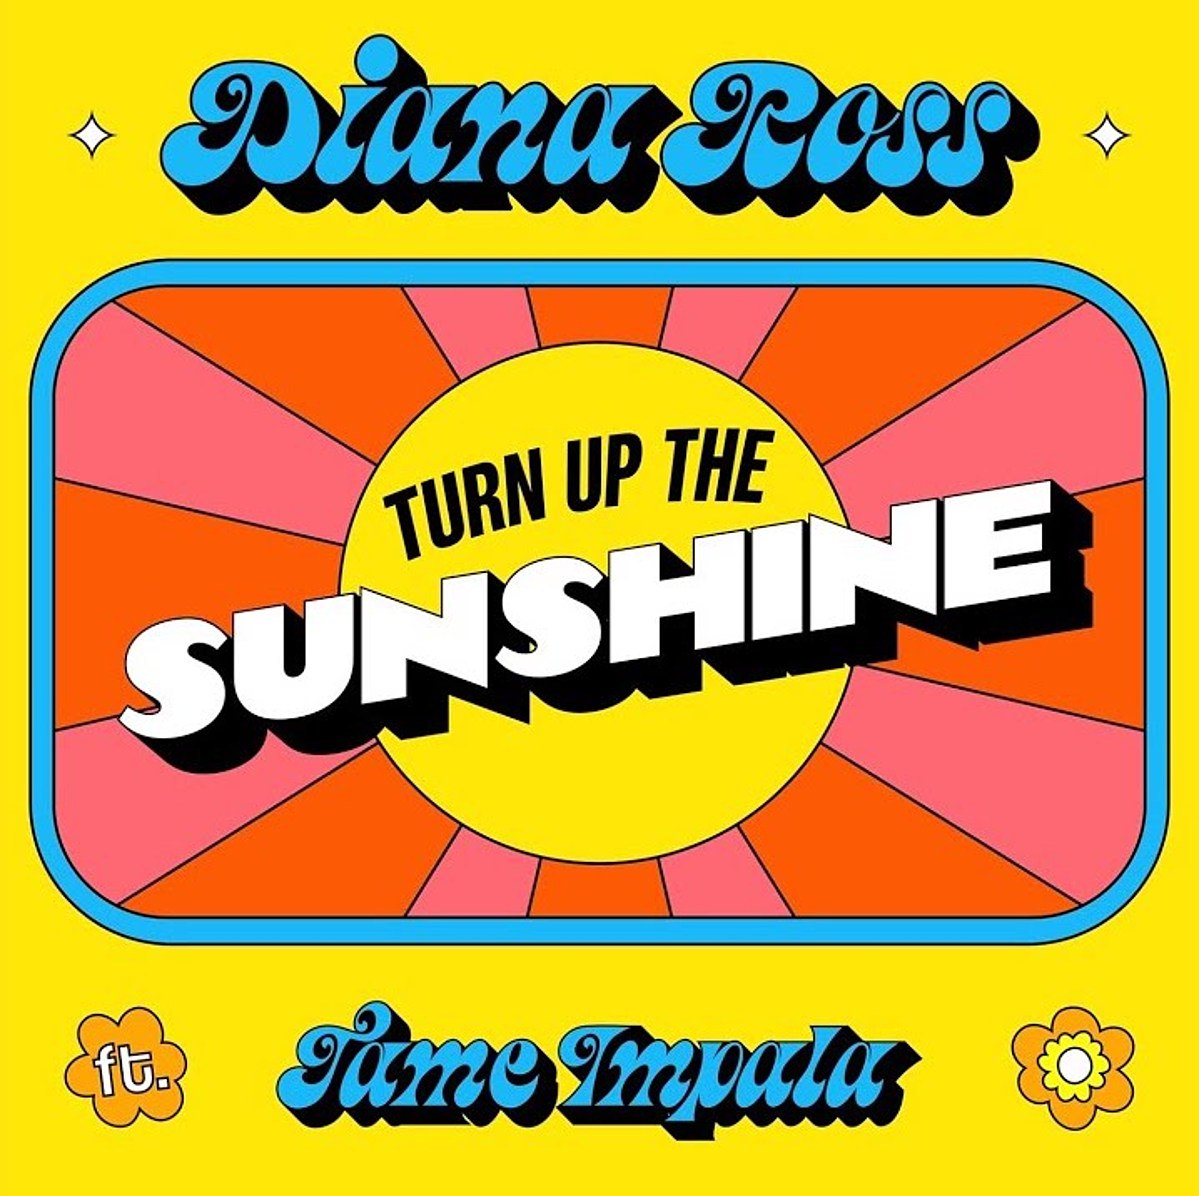 Diana Ross & Tame Impala Turn Up The Sunshine cover artwork